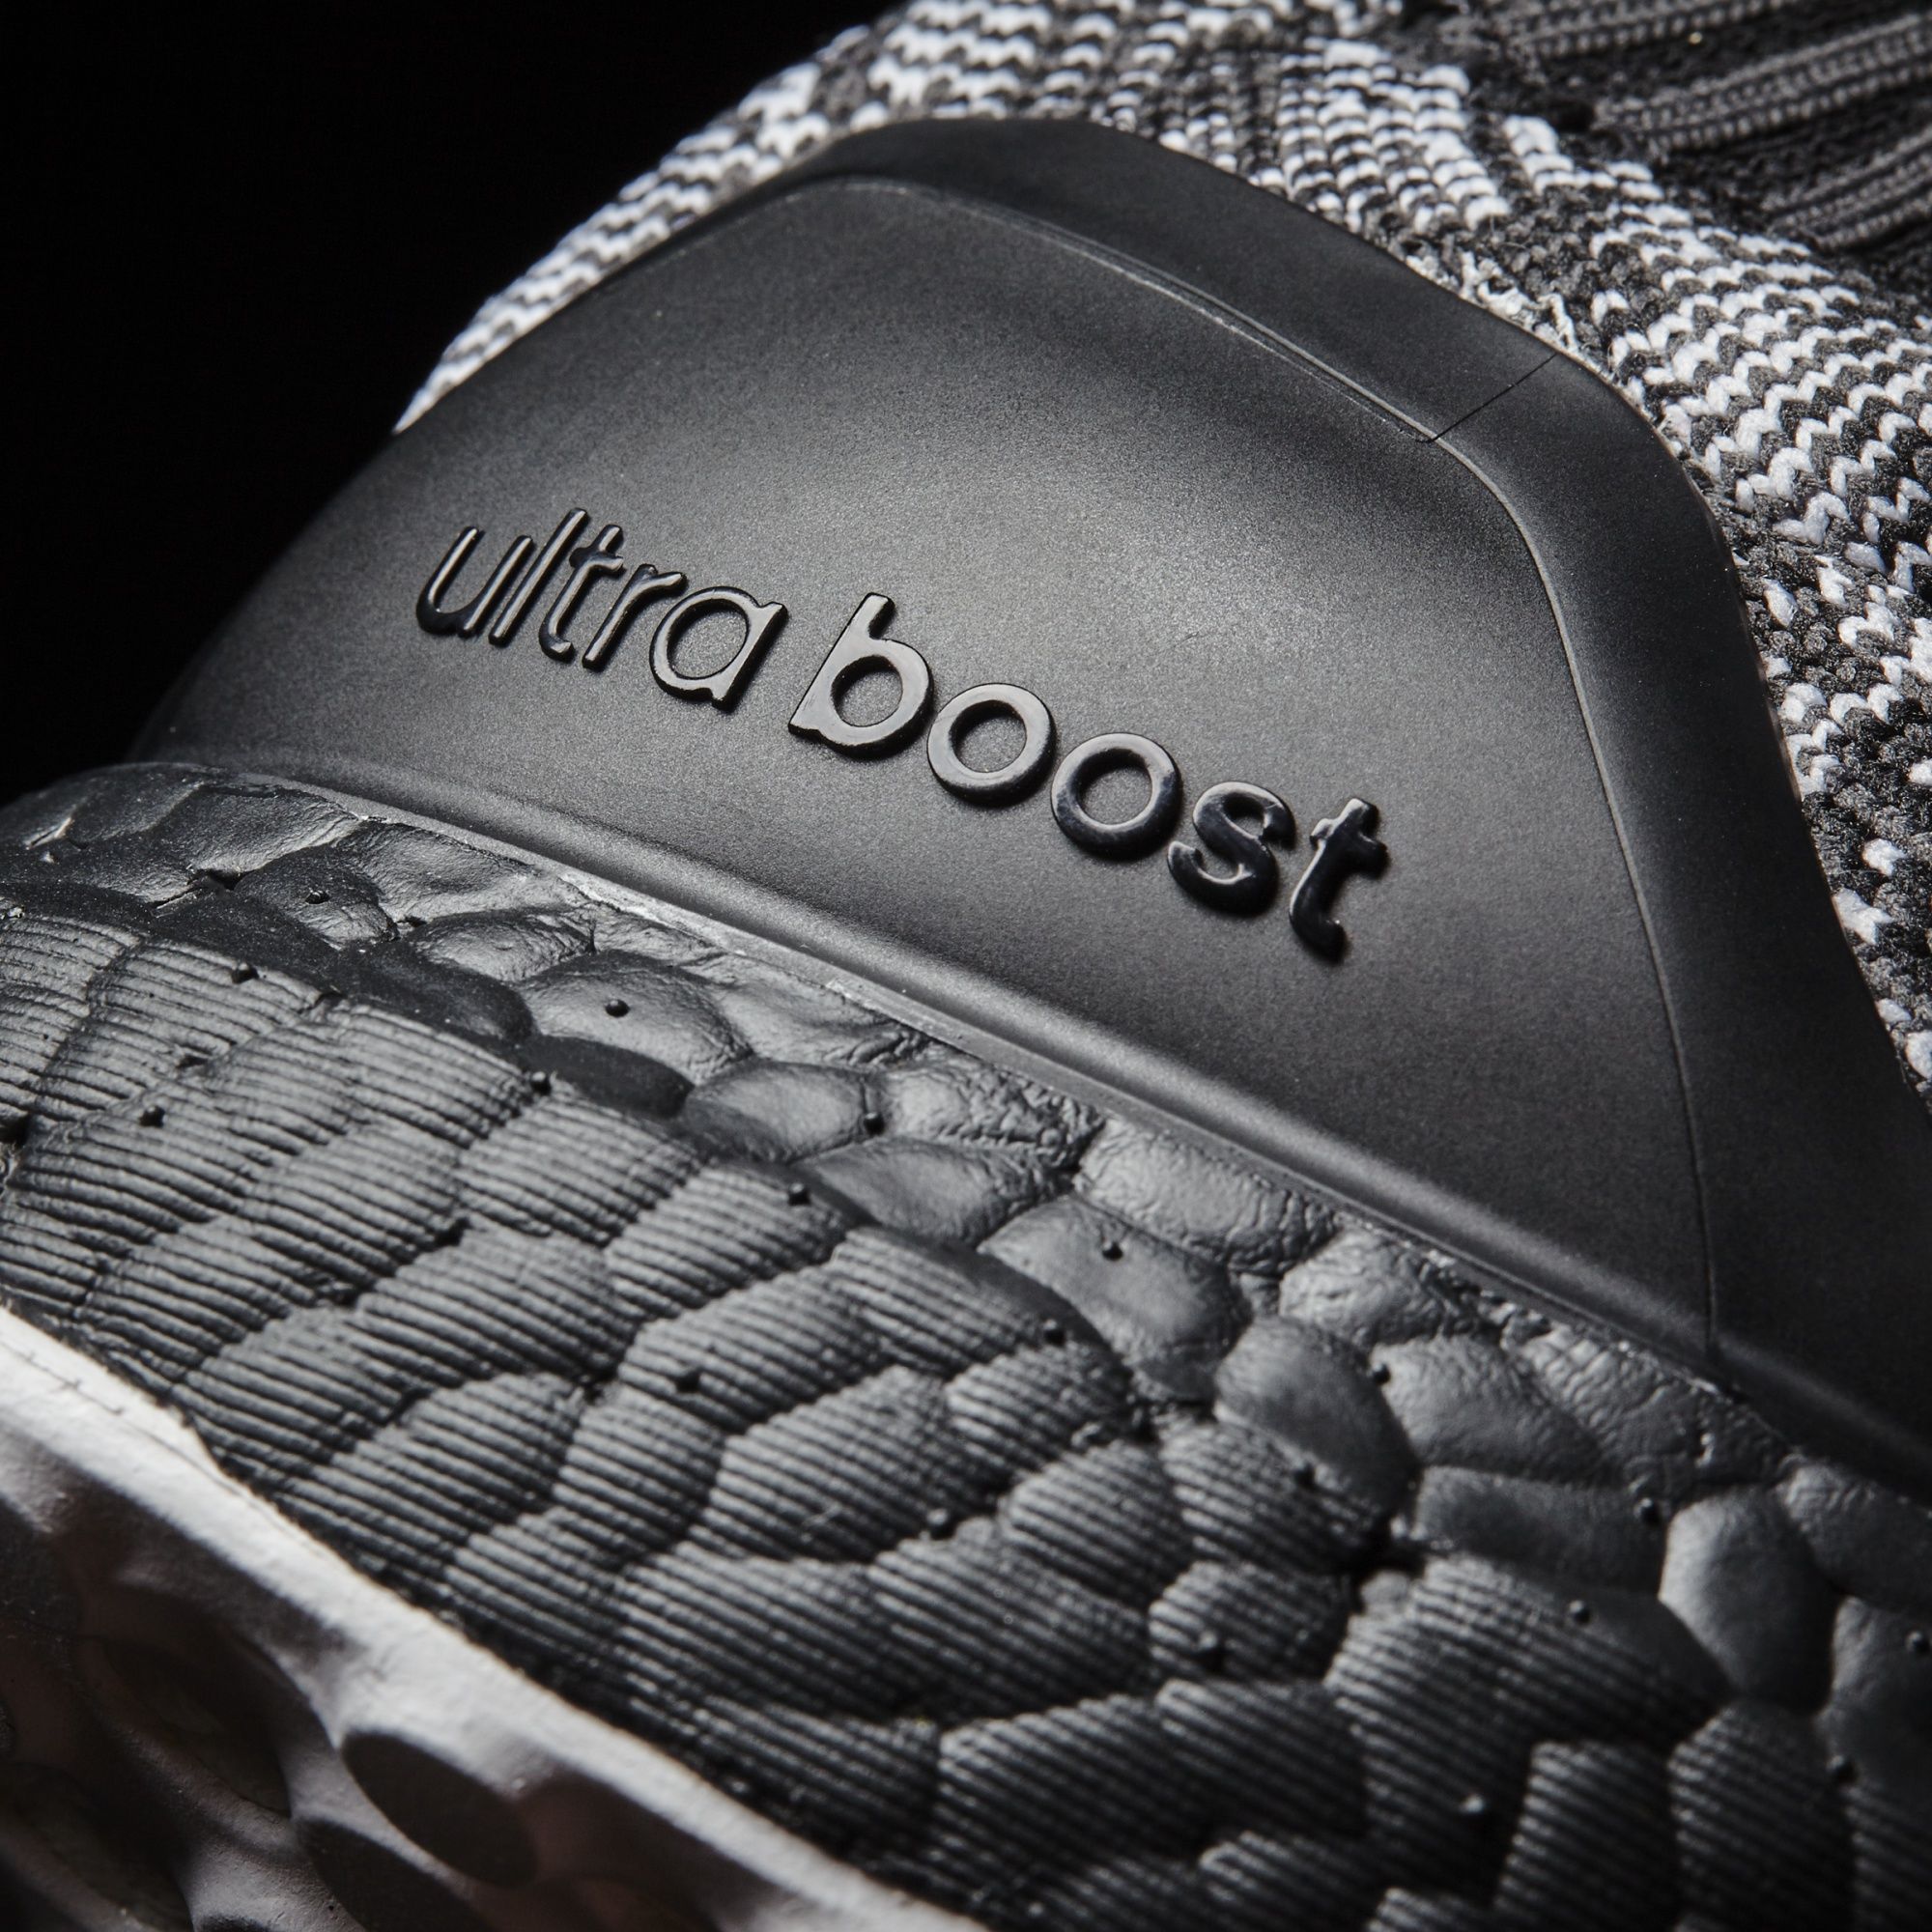 Adidas Ultra Boost Uncaged
Black / Grey / White